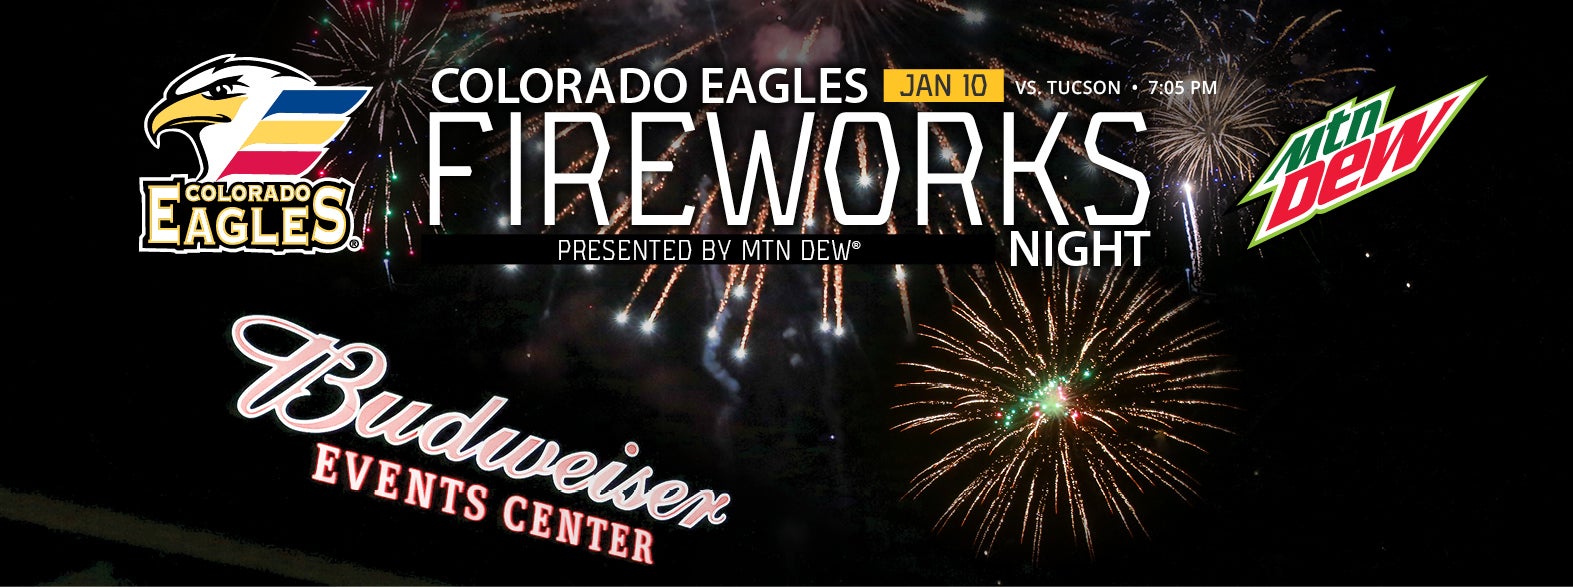 Eagles Host Largest Winter Fireworks Show